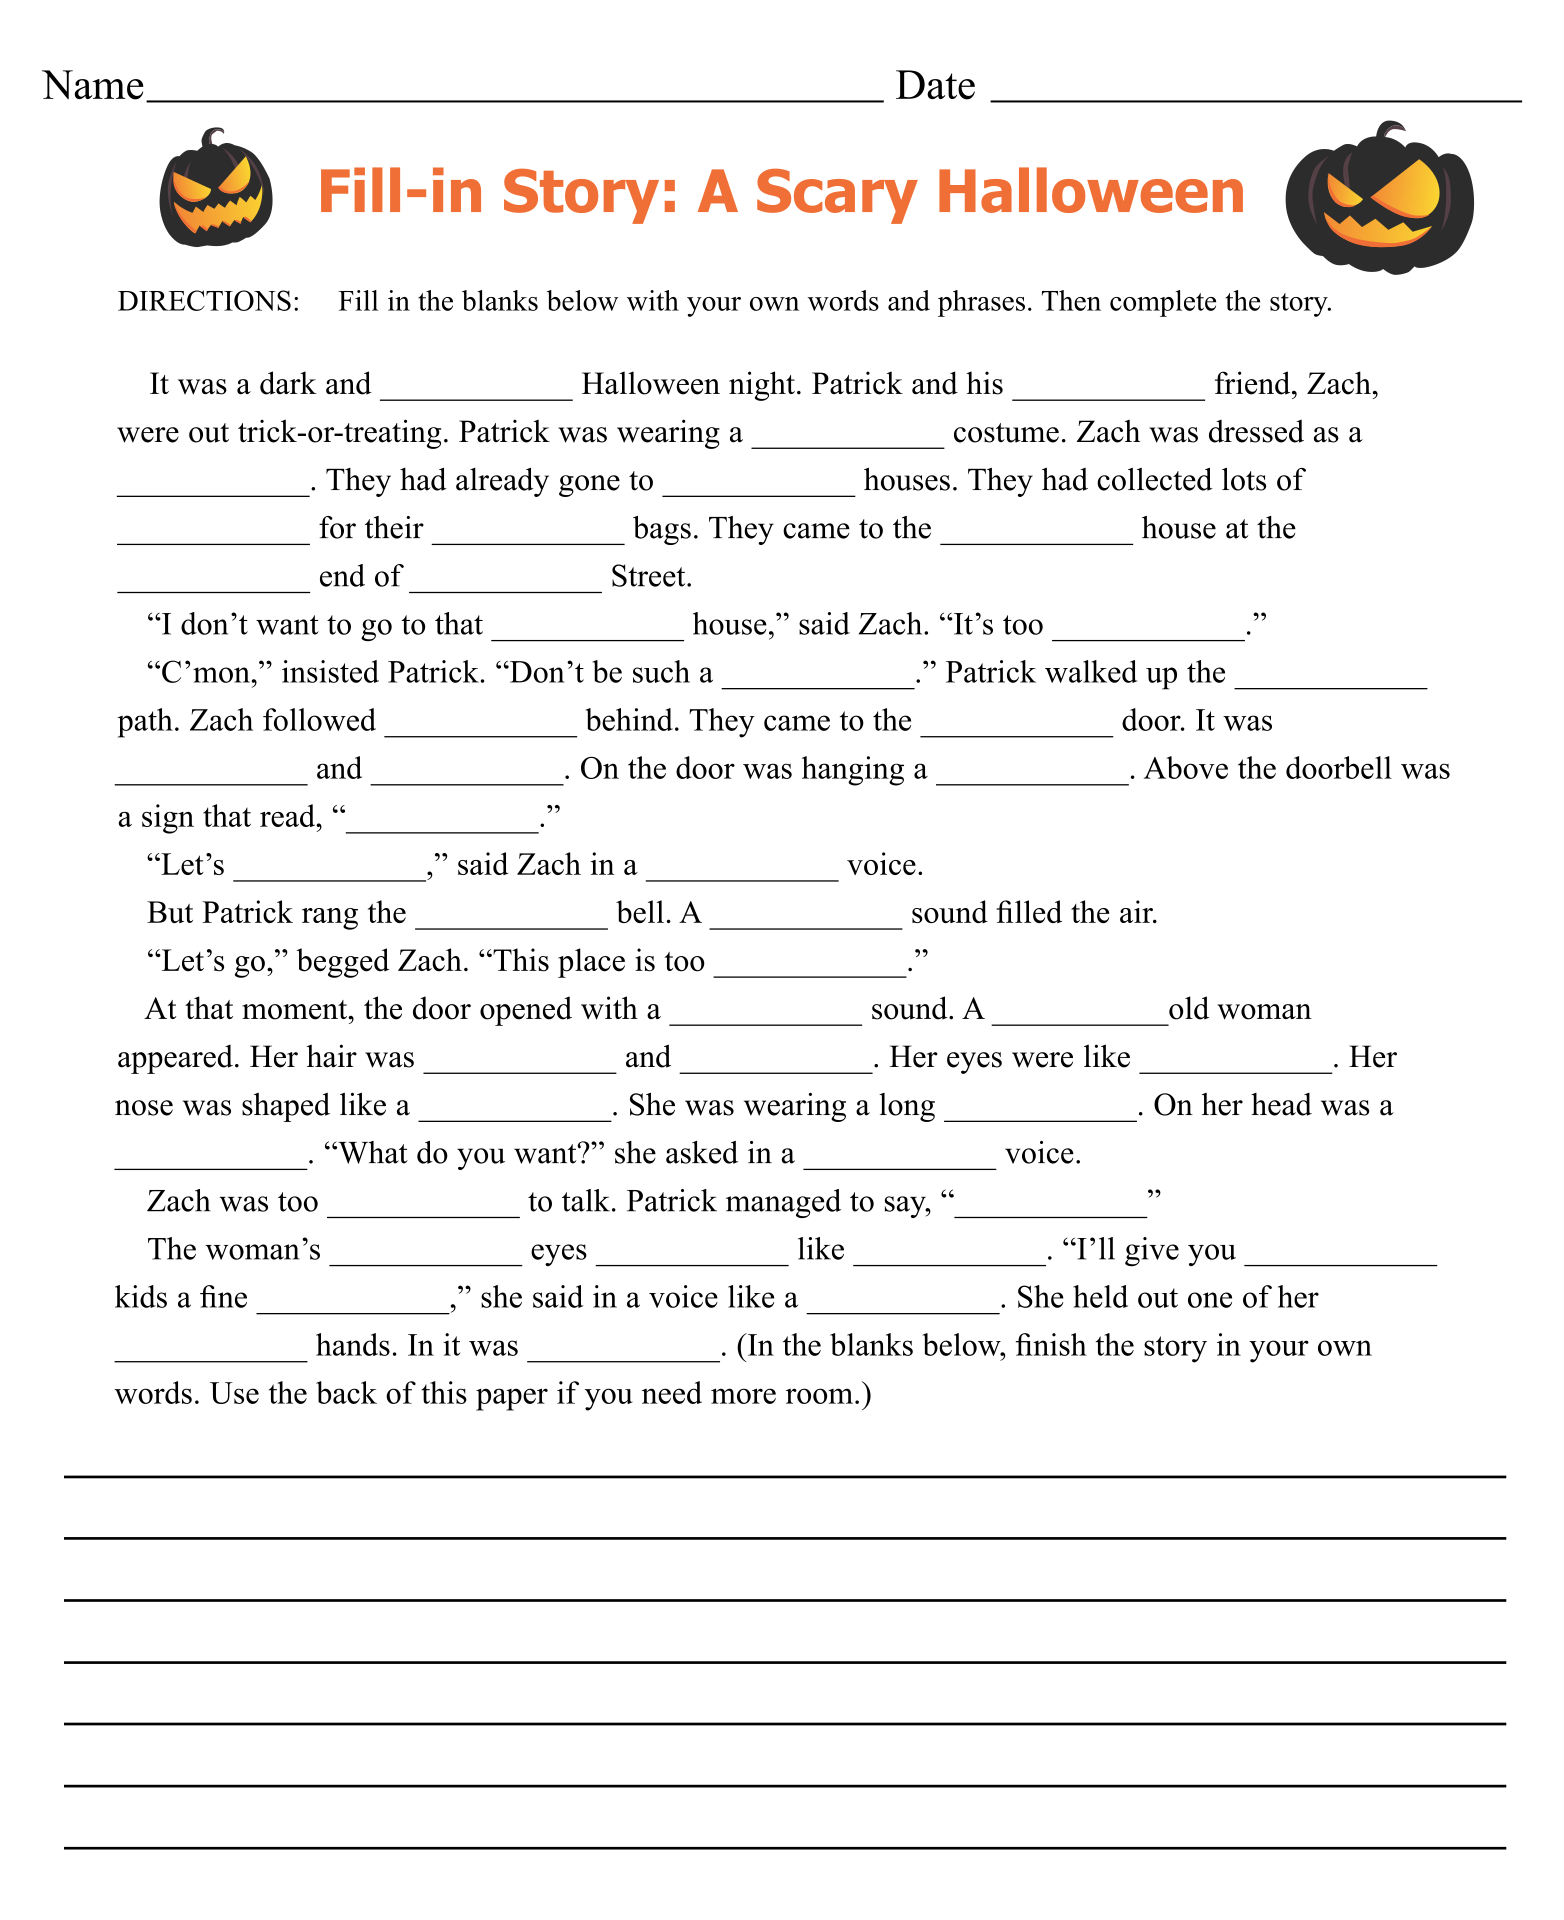 Spooky Story Fill-in-the-Blank